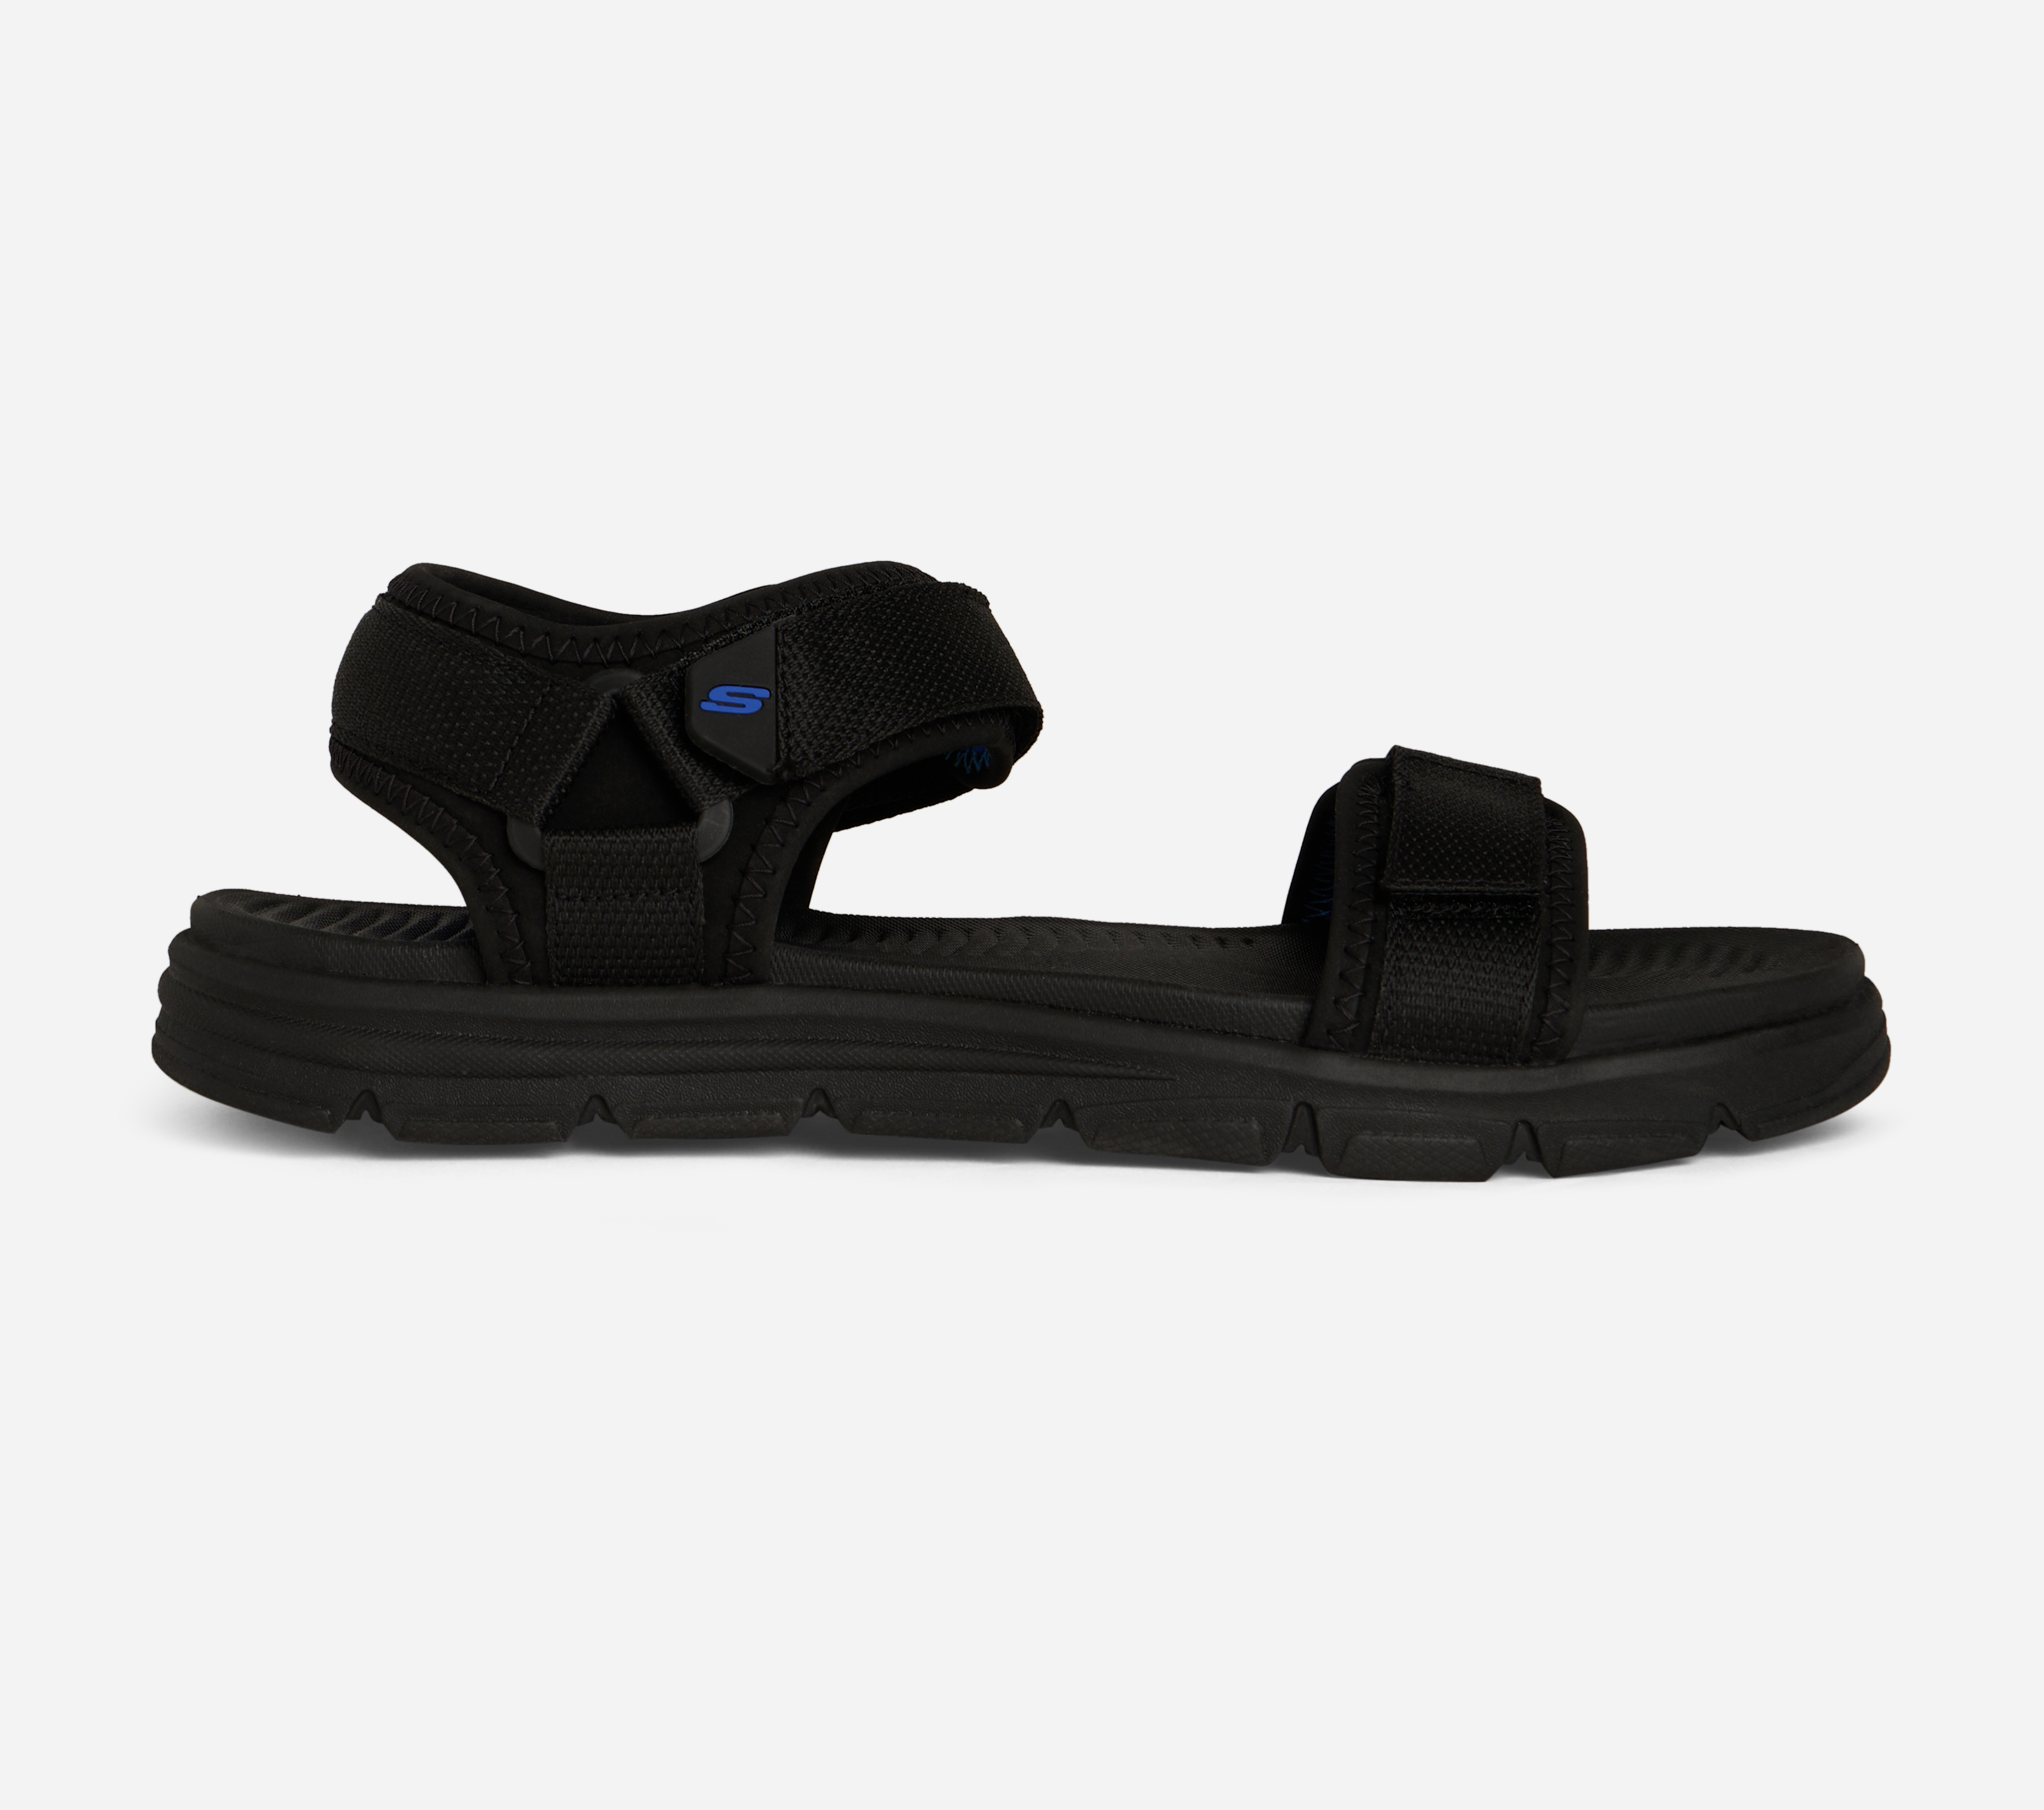 WIND SWELL - SWELL SWIFT, BLACK/BLUE Footwear Top View